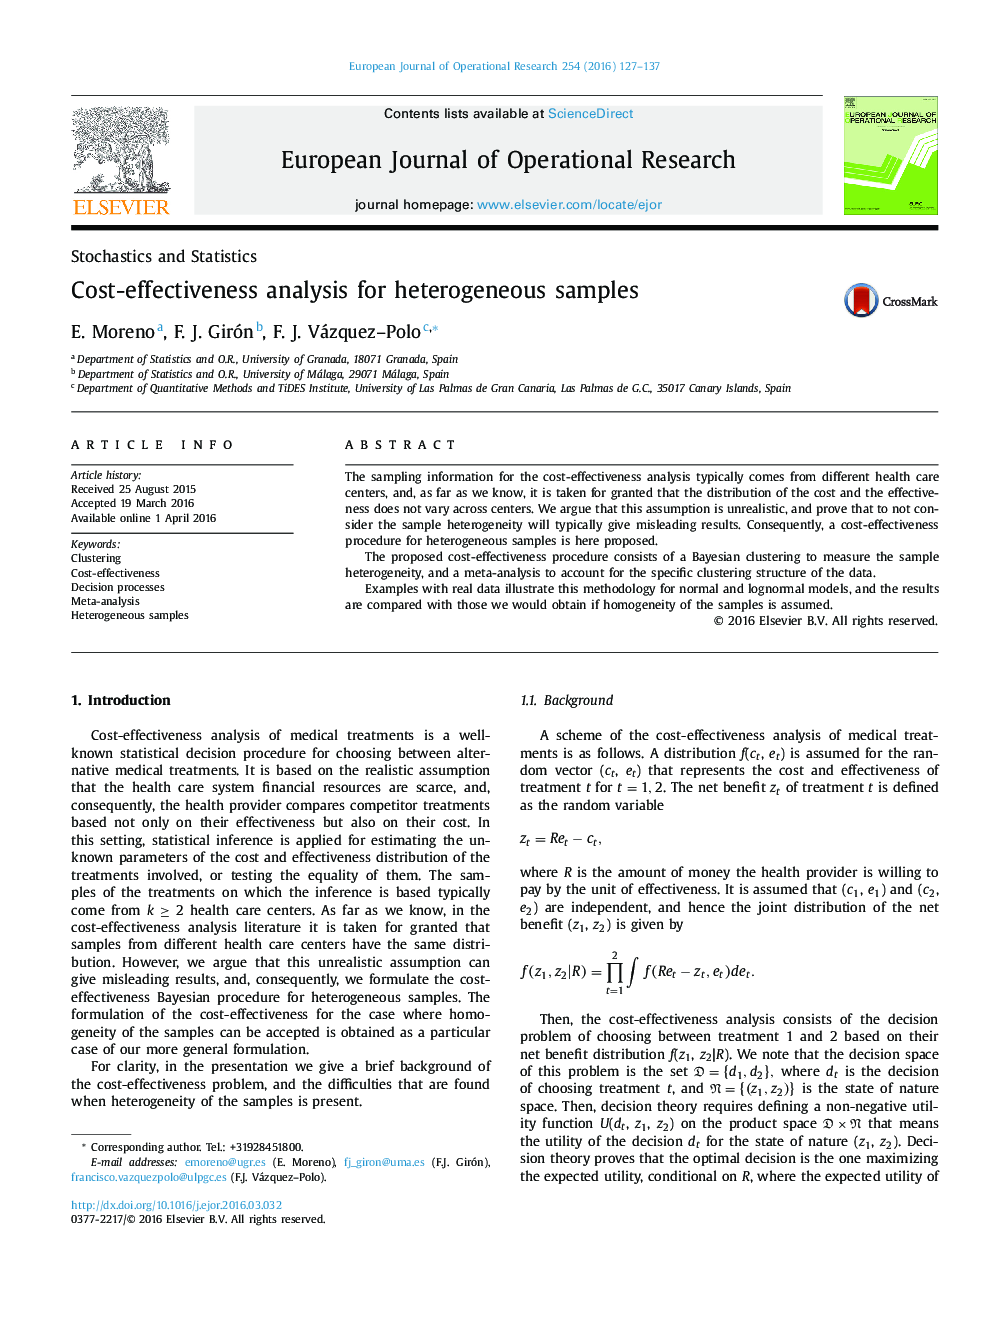 Cost-effectiveness analysis for heterogeneous samples